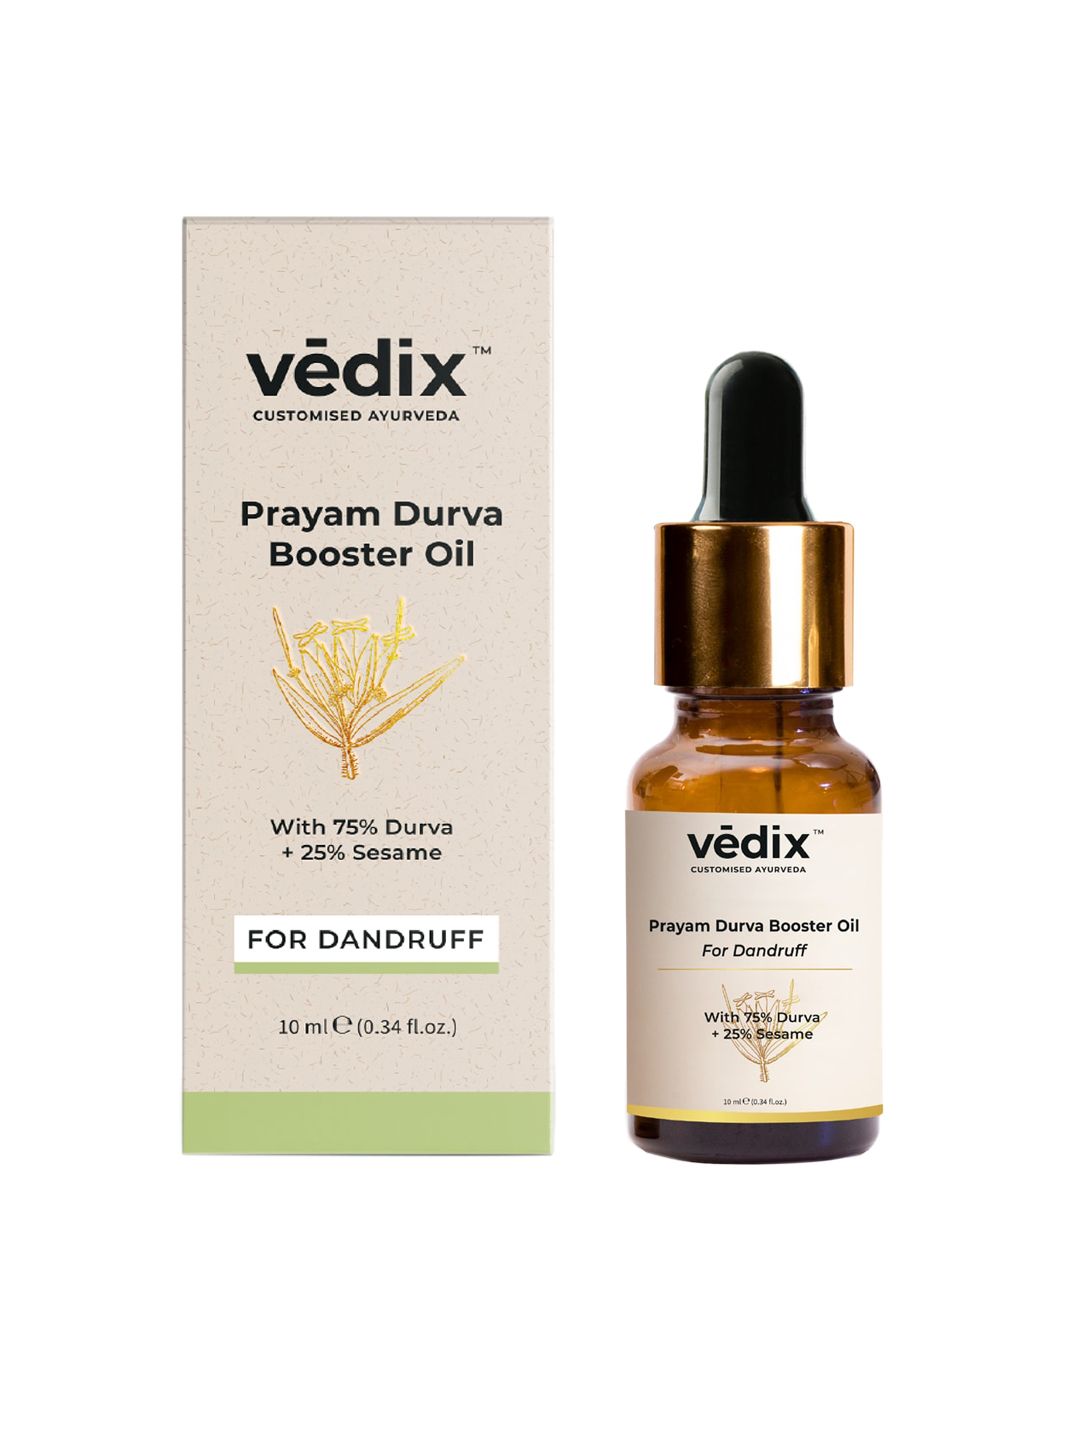 VEDIX Ayurvedic Hair Oil Prayam Durva Booster Oil  For Dandruff Care & Hair Growth - 10 ml Price in India